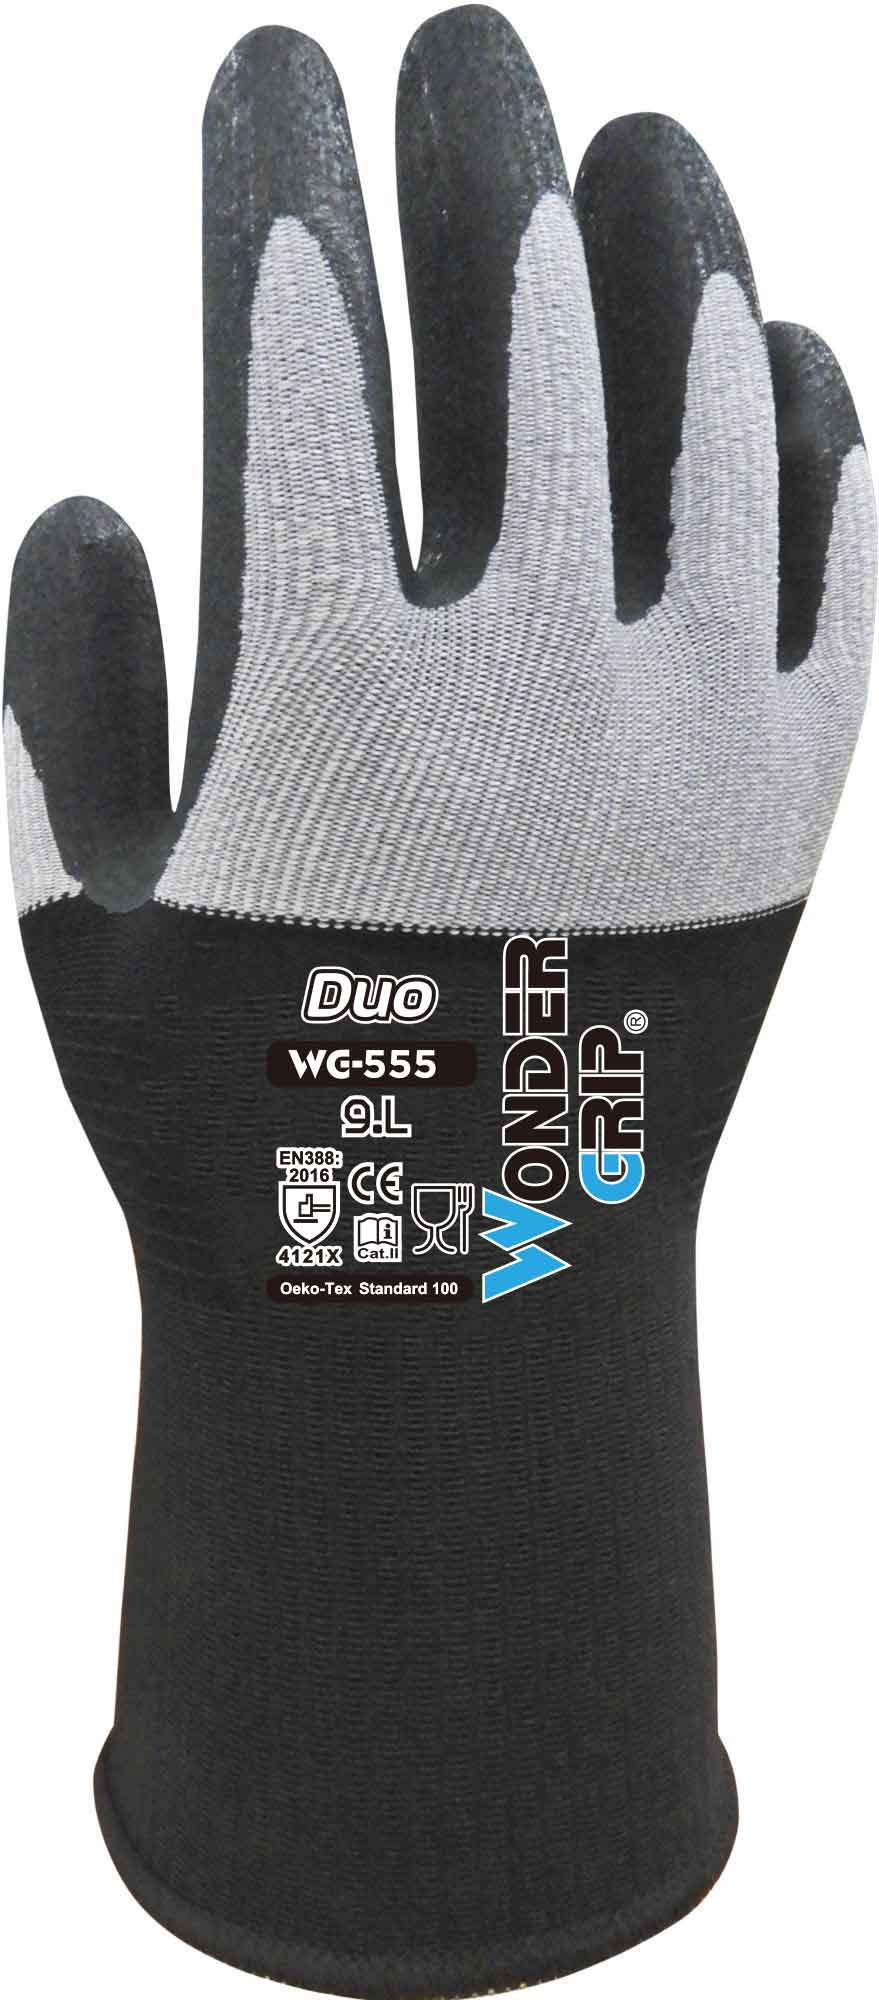 Wonder Grip WG-555 Duo Multi-Purpose Protective Gloves N°2, Size M/08